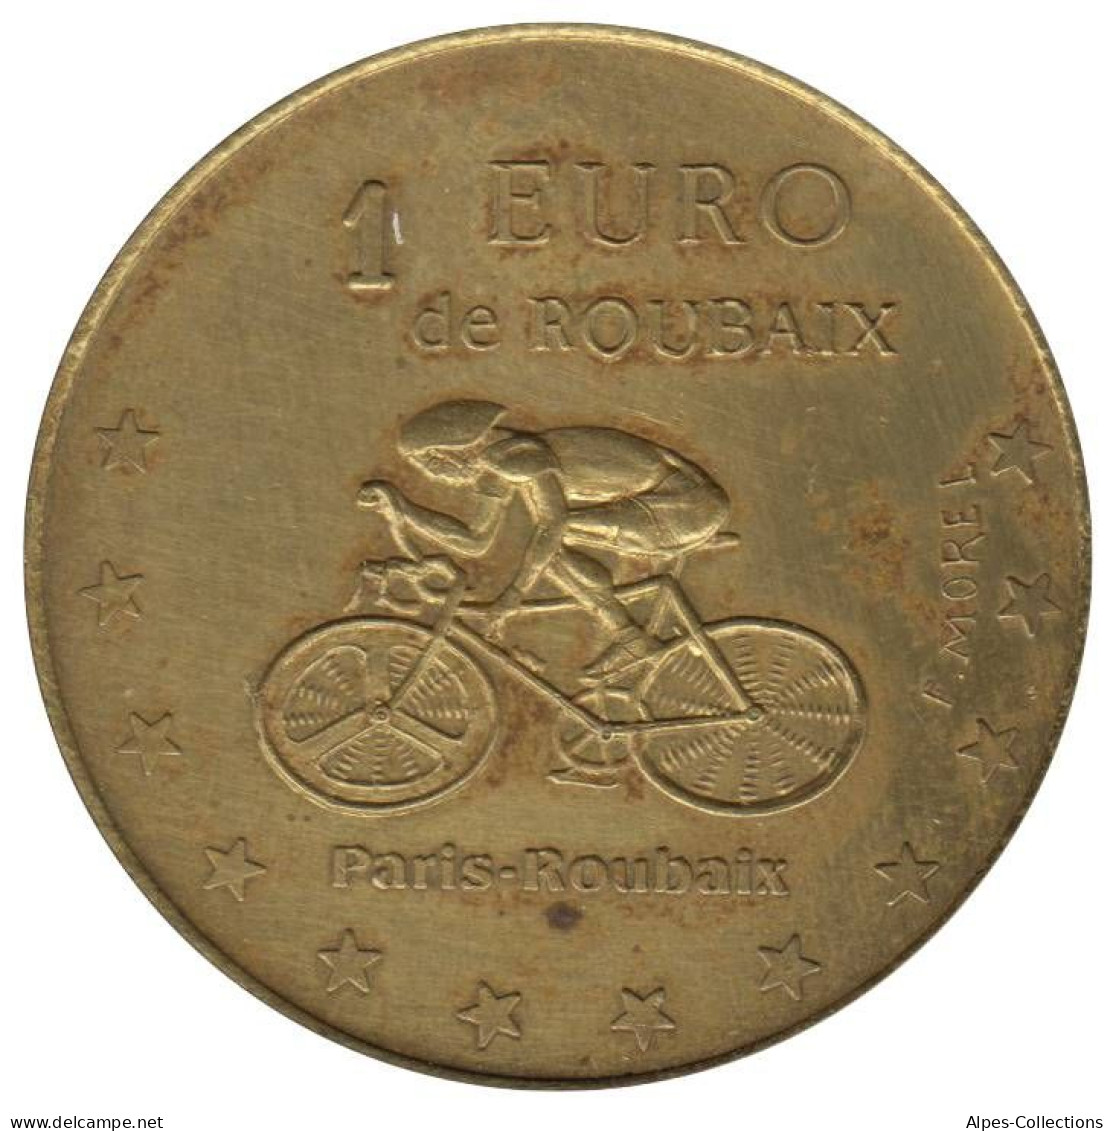 ROUBAIX - EU0010.1 - 1 EURO DES VILLES - Réf: NR - 1998 - Euro Van De Steden